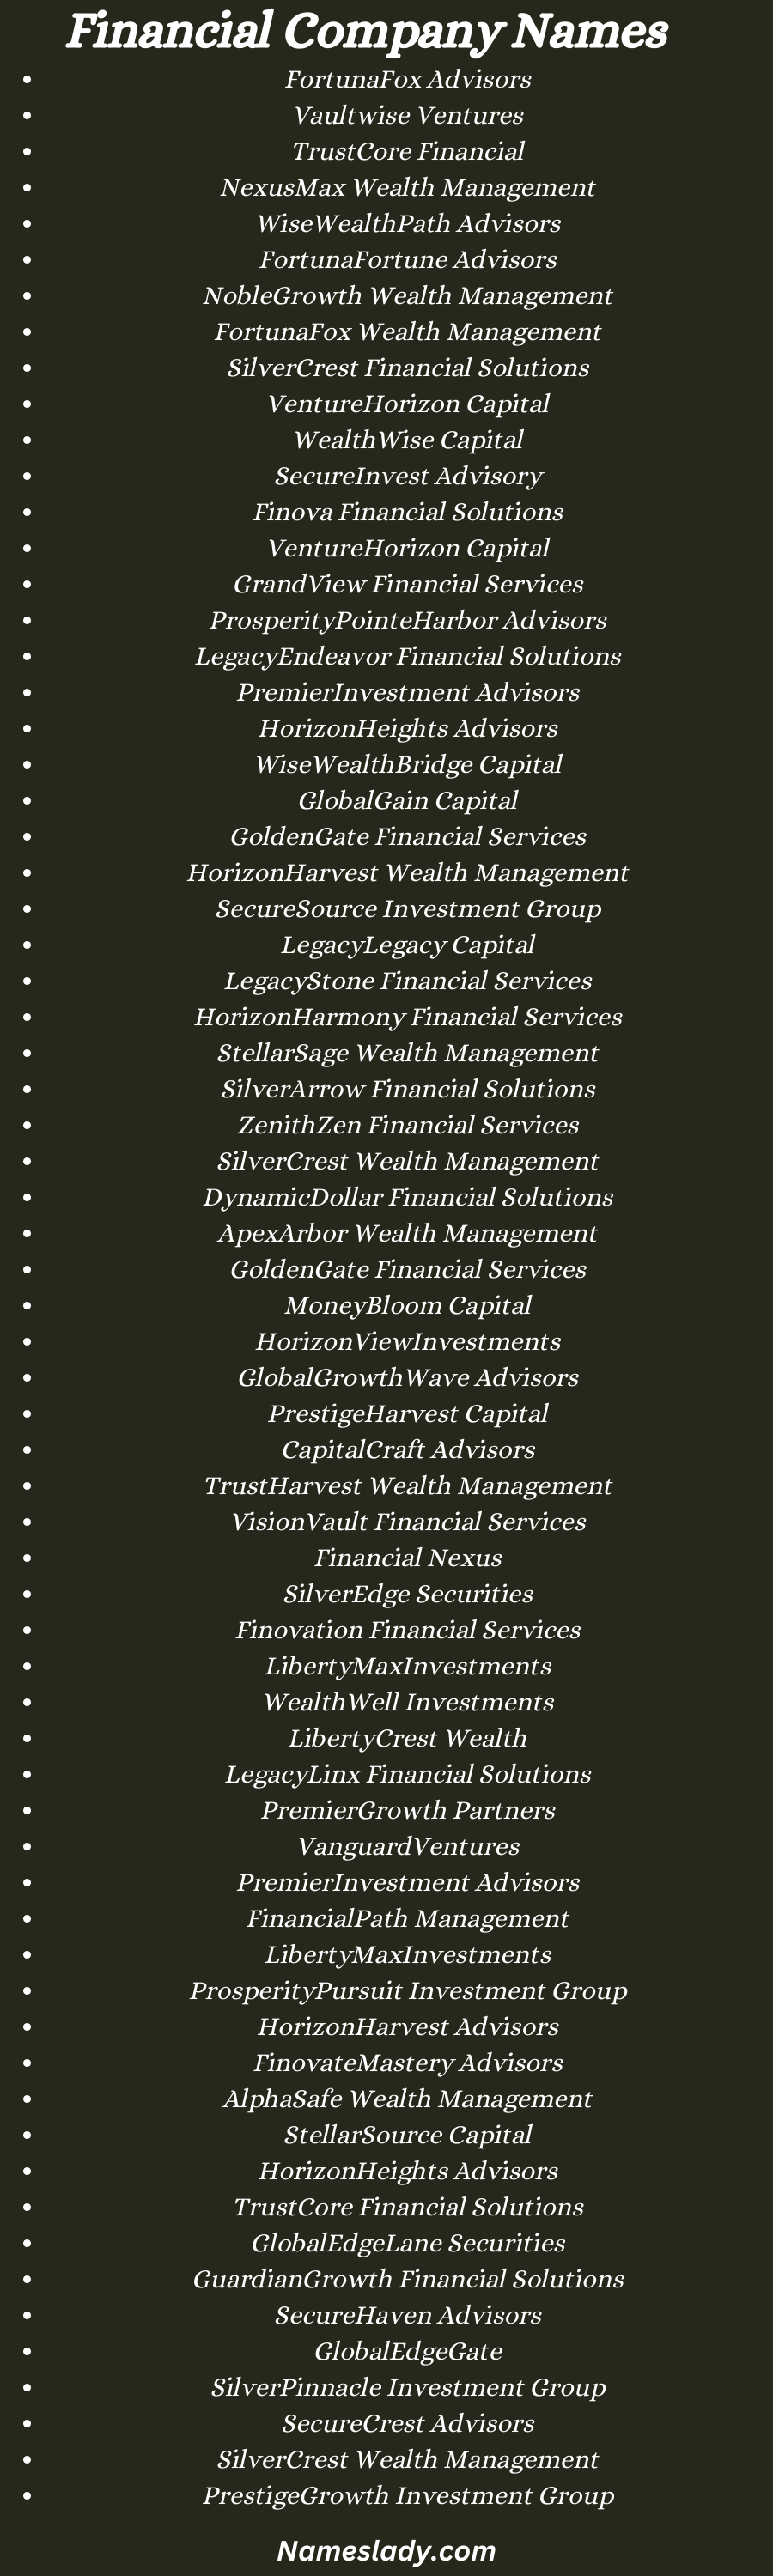 Financial Company Names 